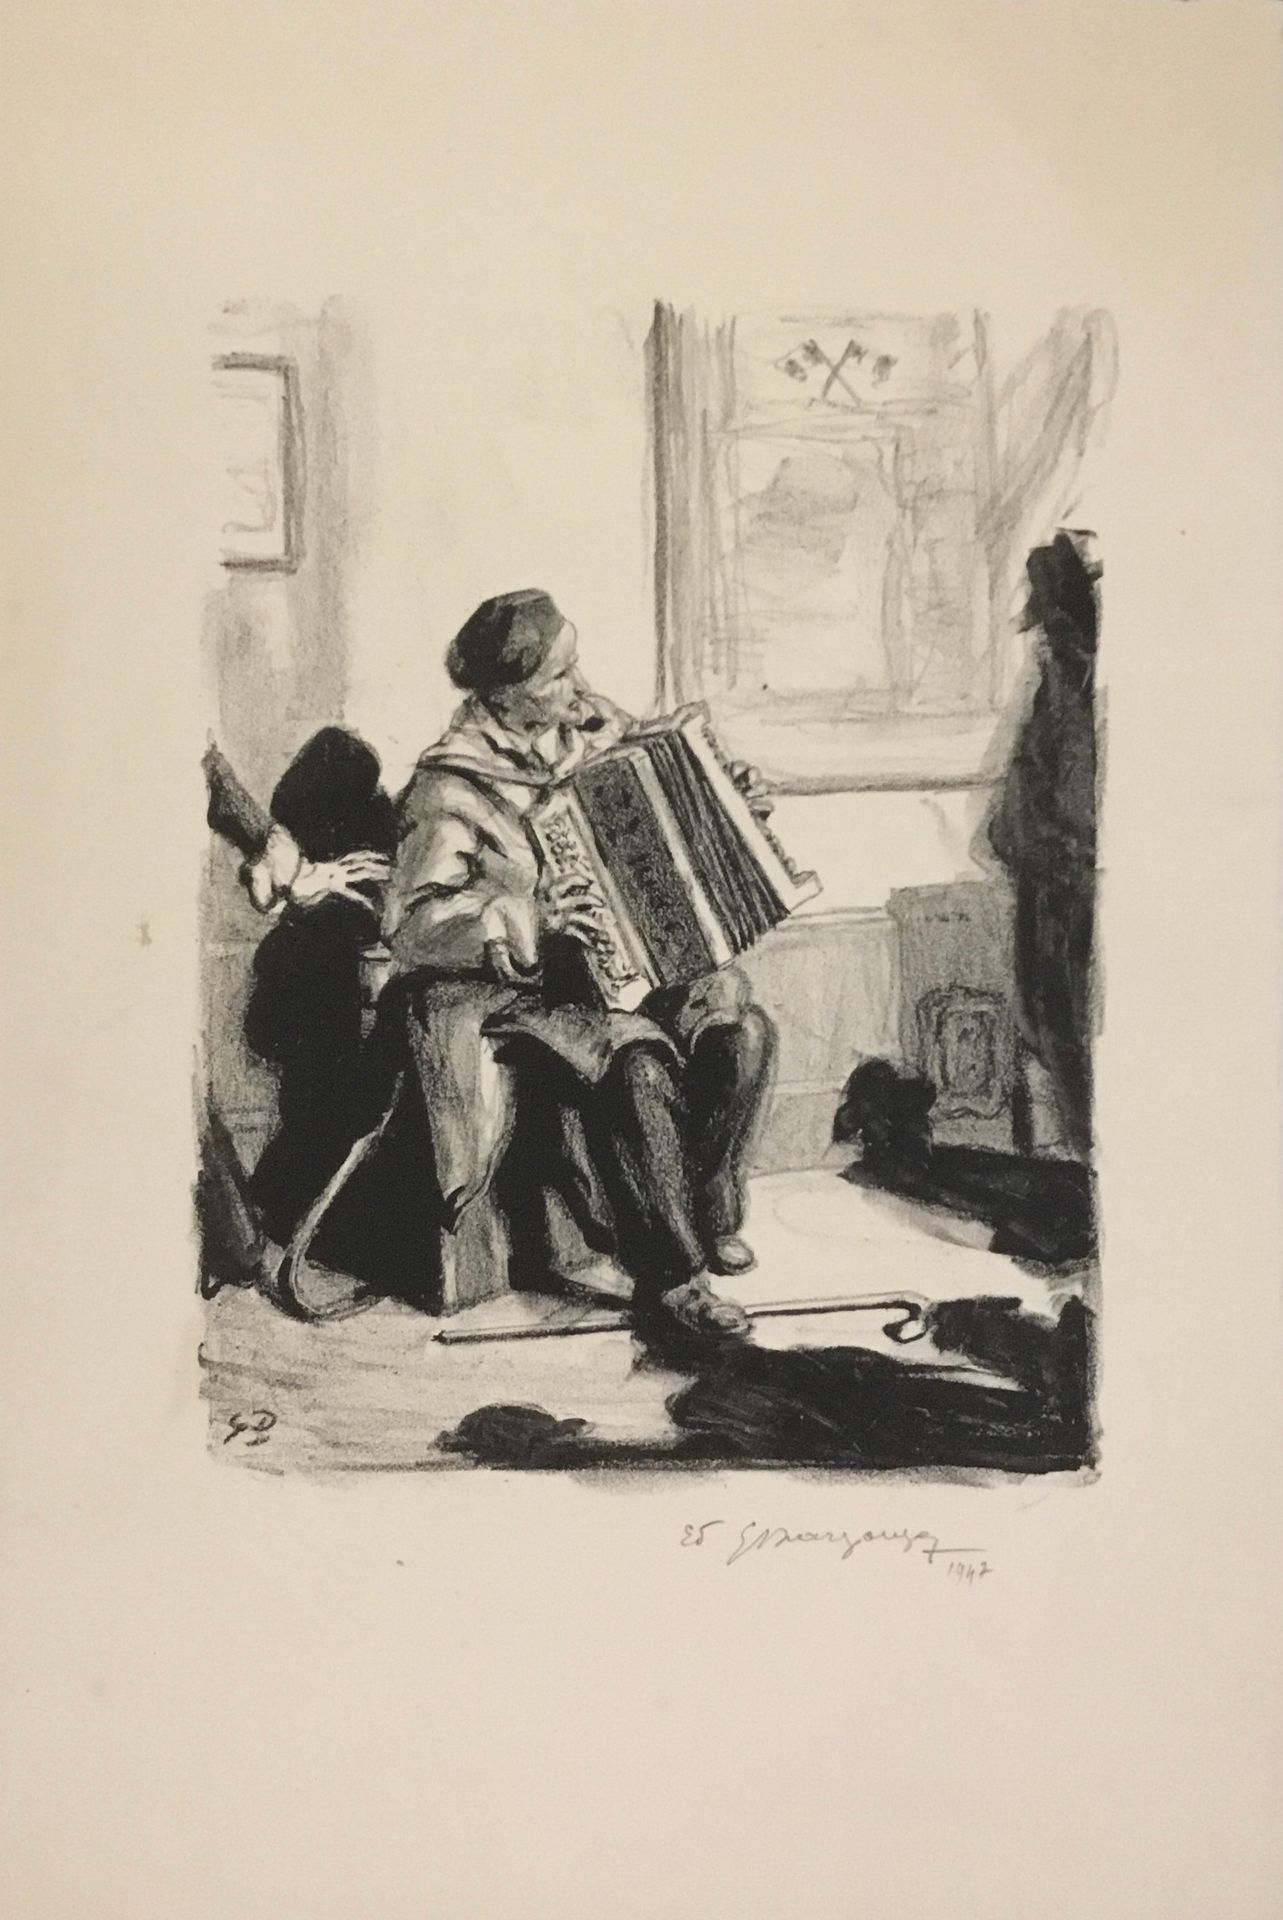 Null 孤独的人

石版画右下方有签名，日期为1947年 "l'accordéoniste"。 

36 x 24 厘米